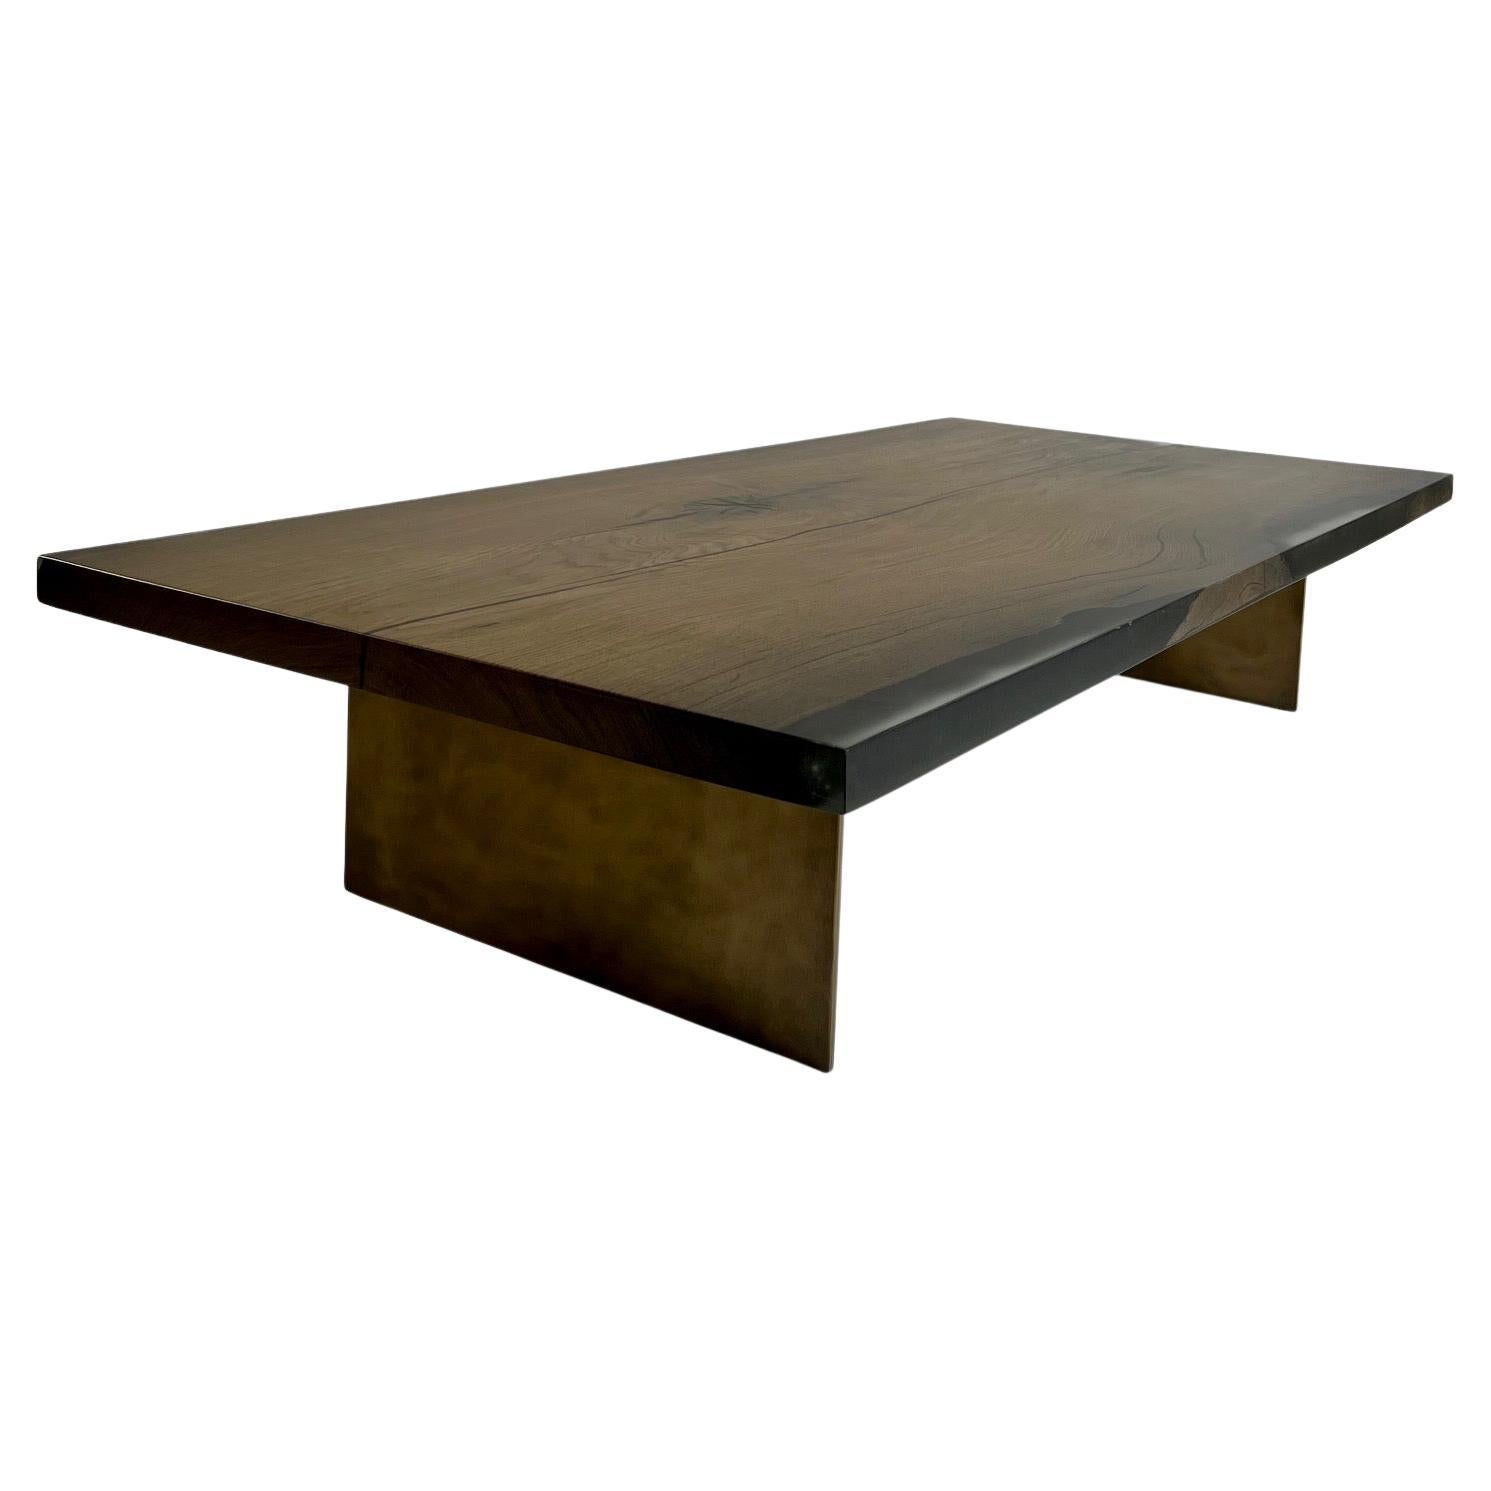 Table basse en bois avec base en acier